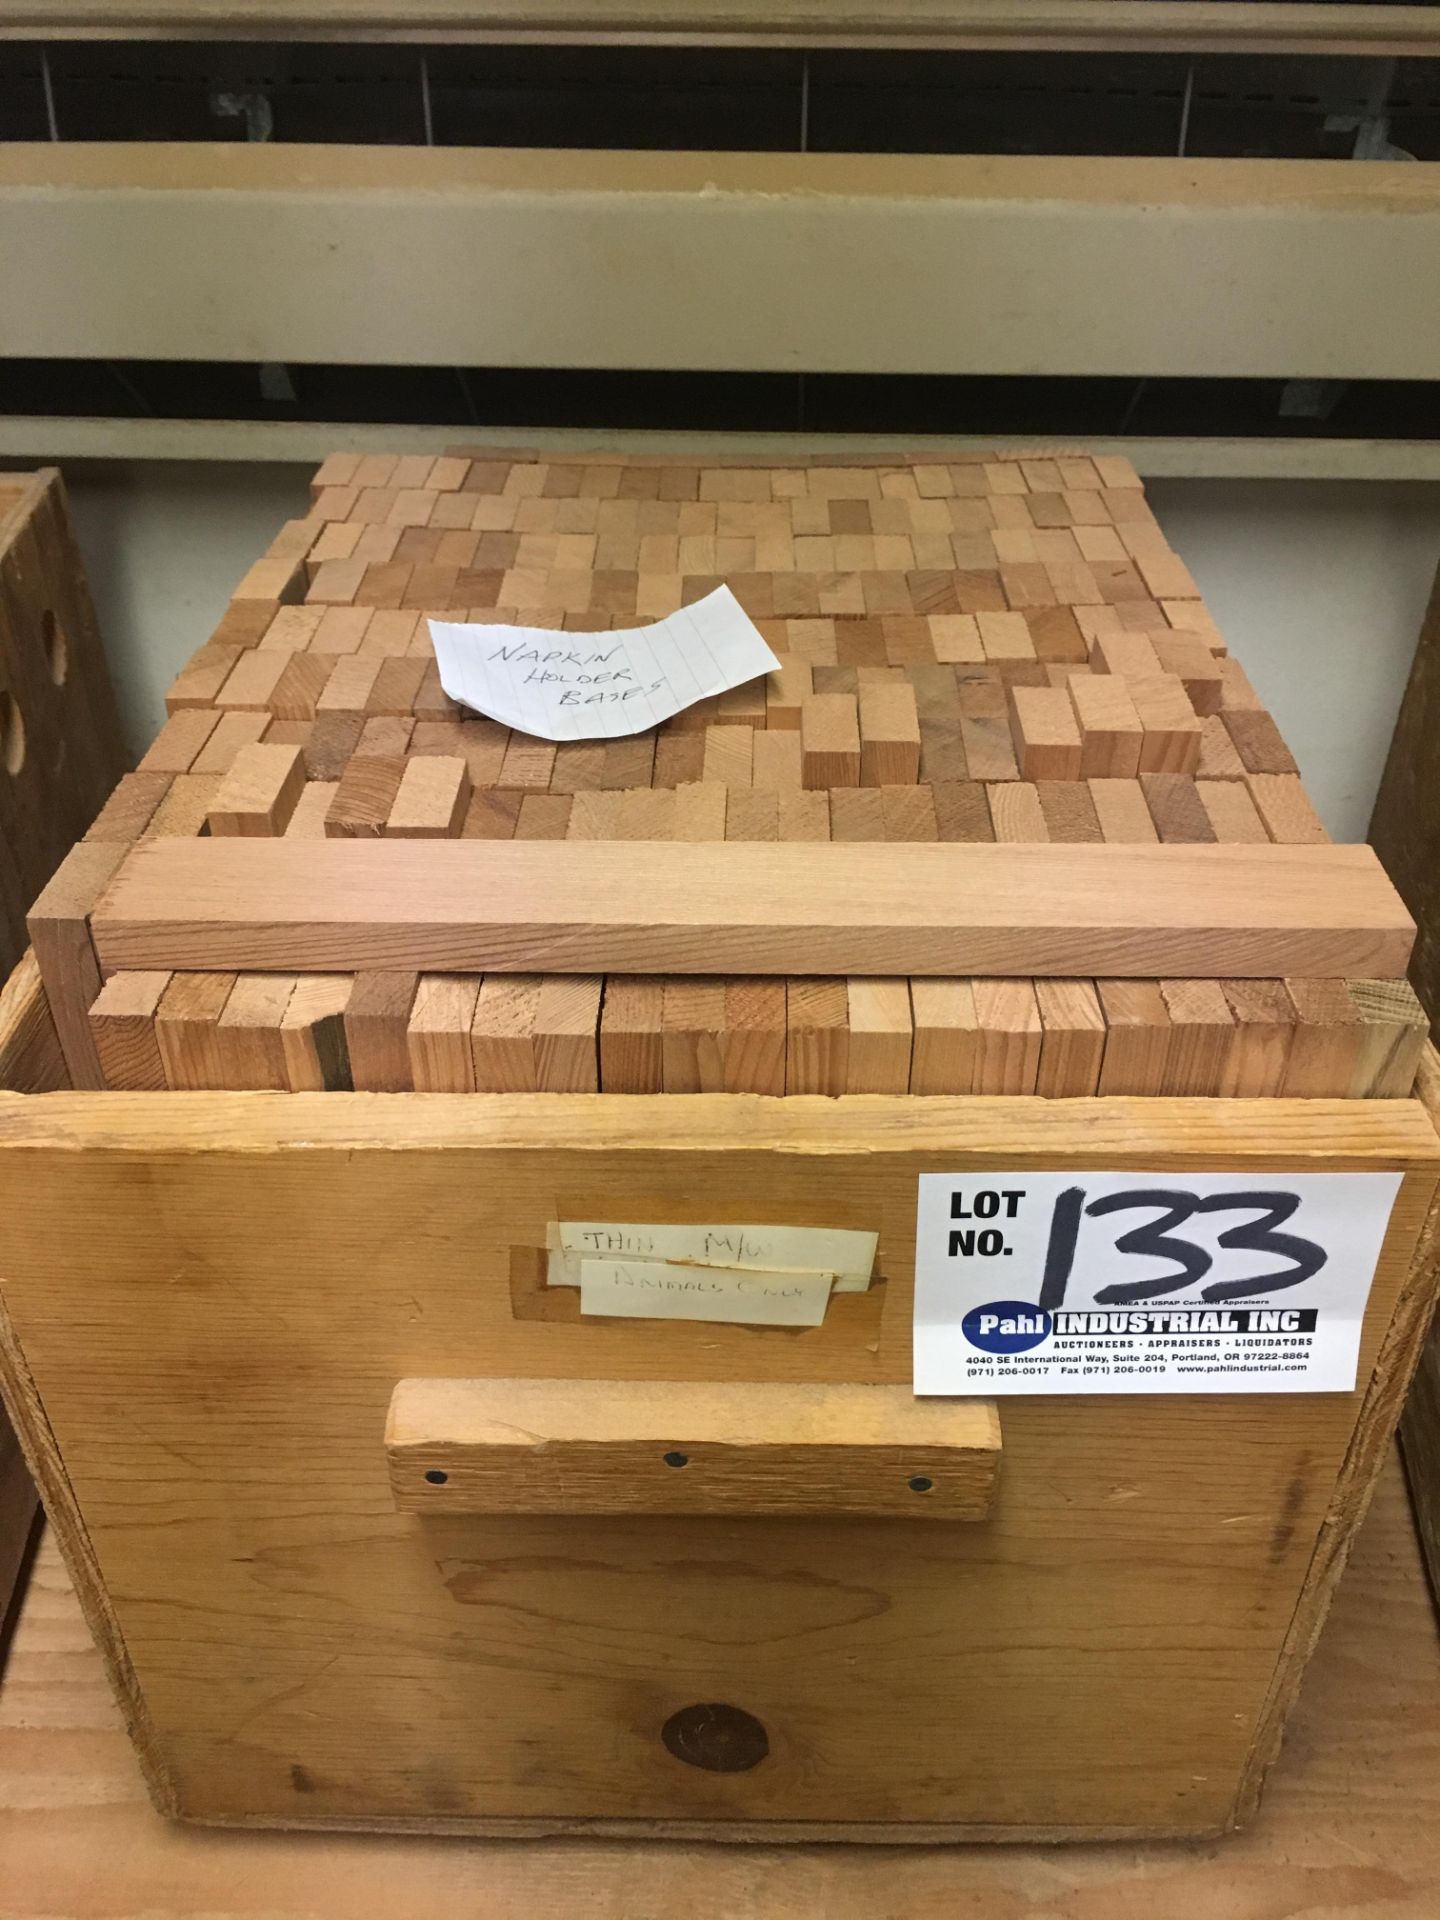 1 Box 12" x 1.5" x 1/2" Thick Redwood Blocks